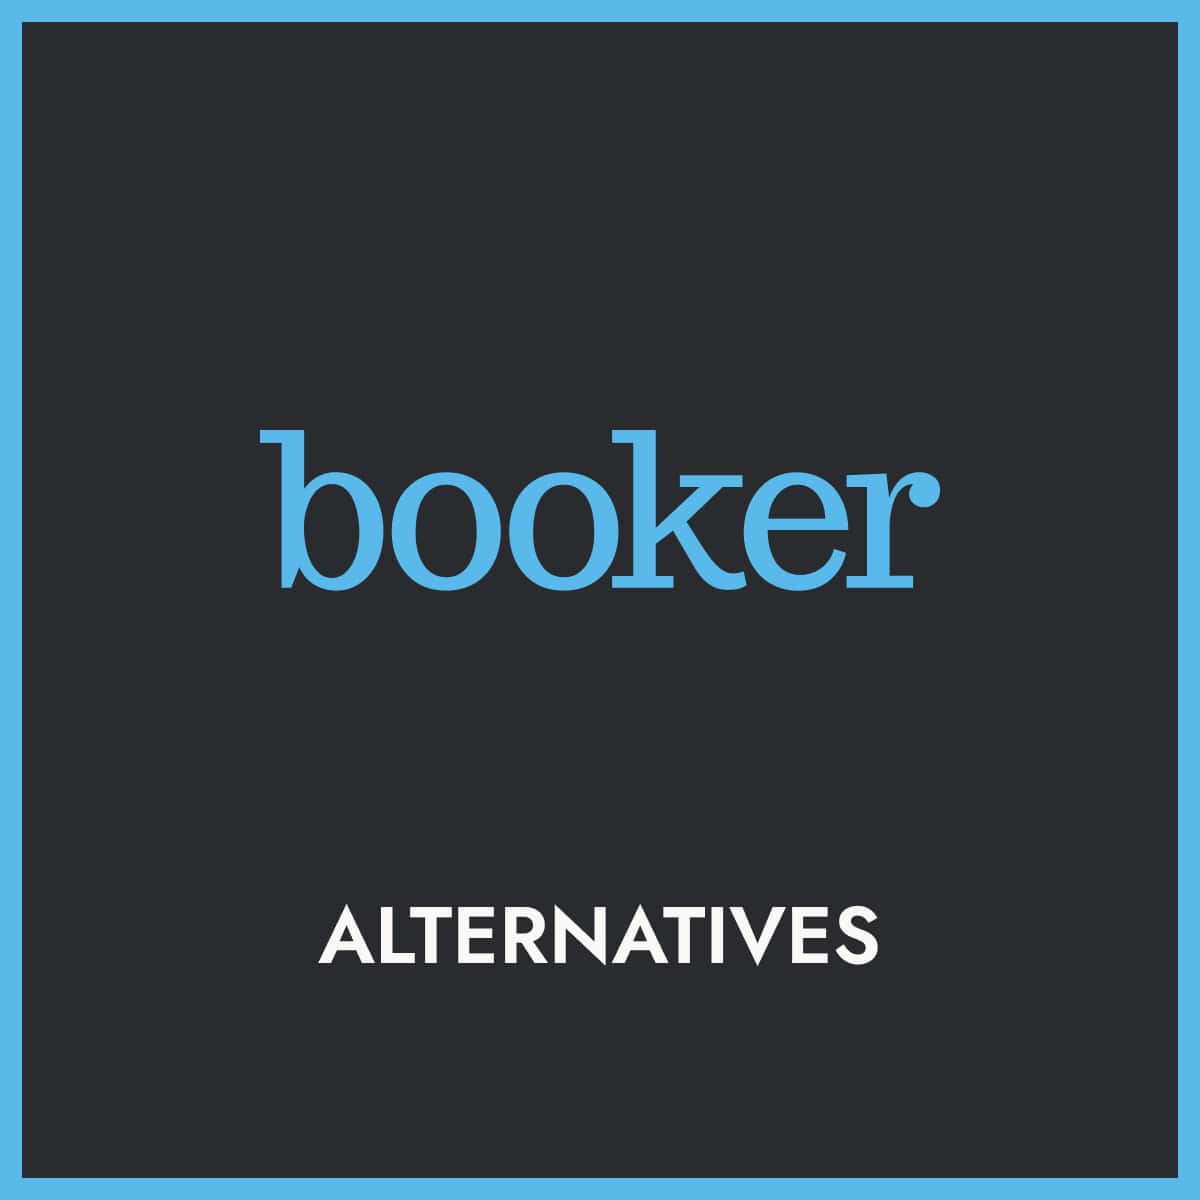 Booker logo above the word "alternatives"